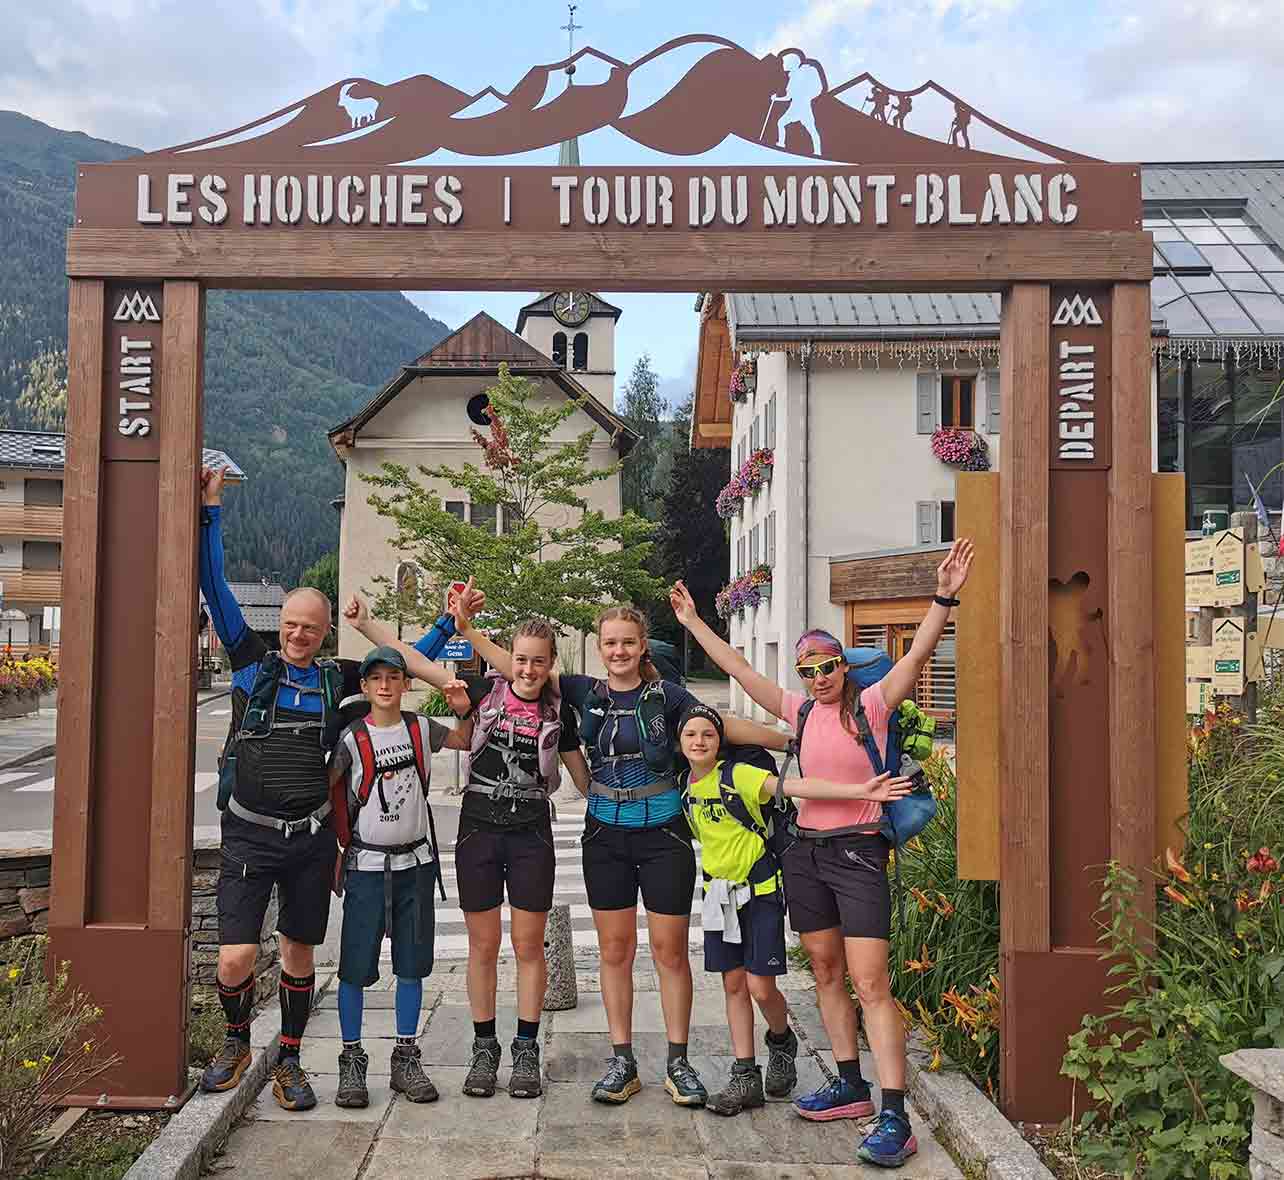 Treking okrog Mont Blanc-a [6 članska družina prehodila Tour de Mont Blanc v 6 dneh!]